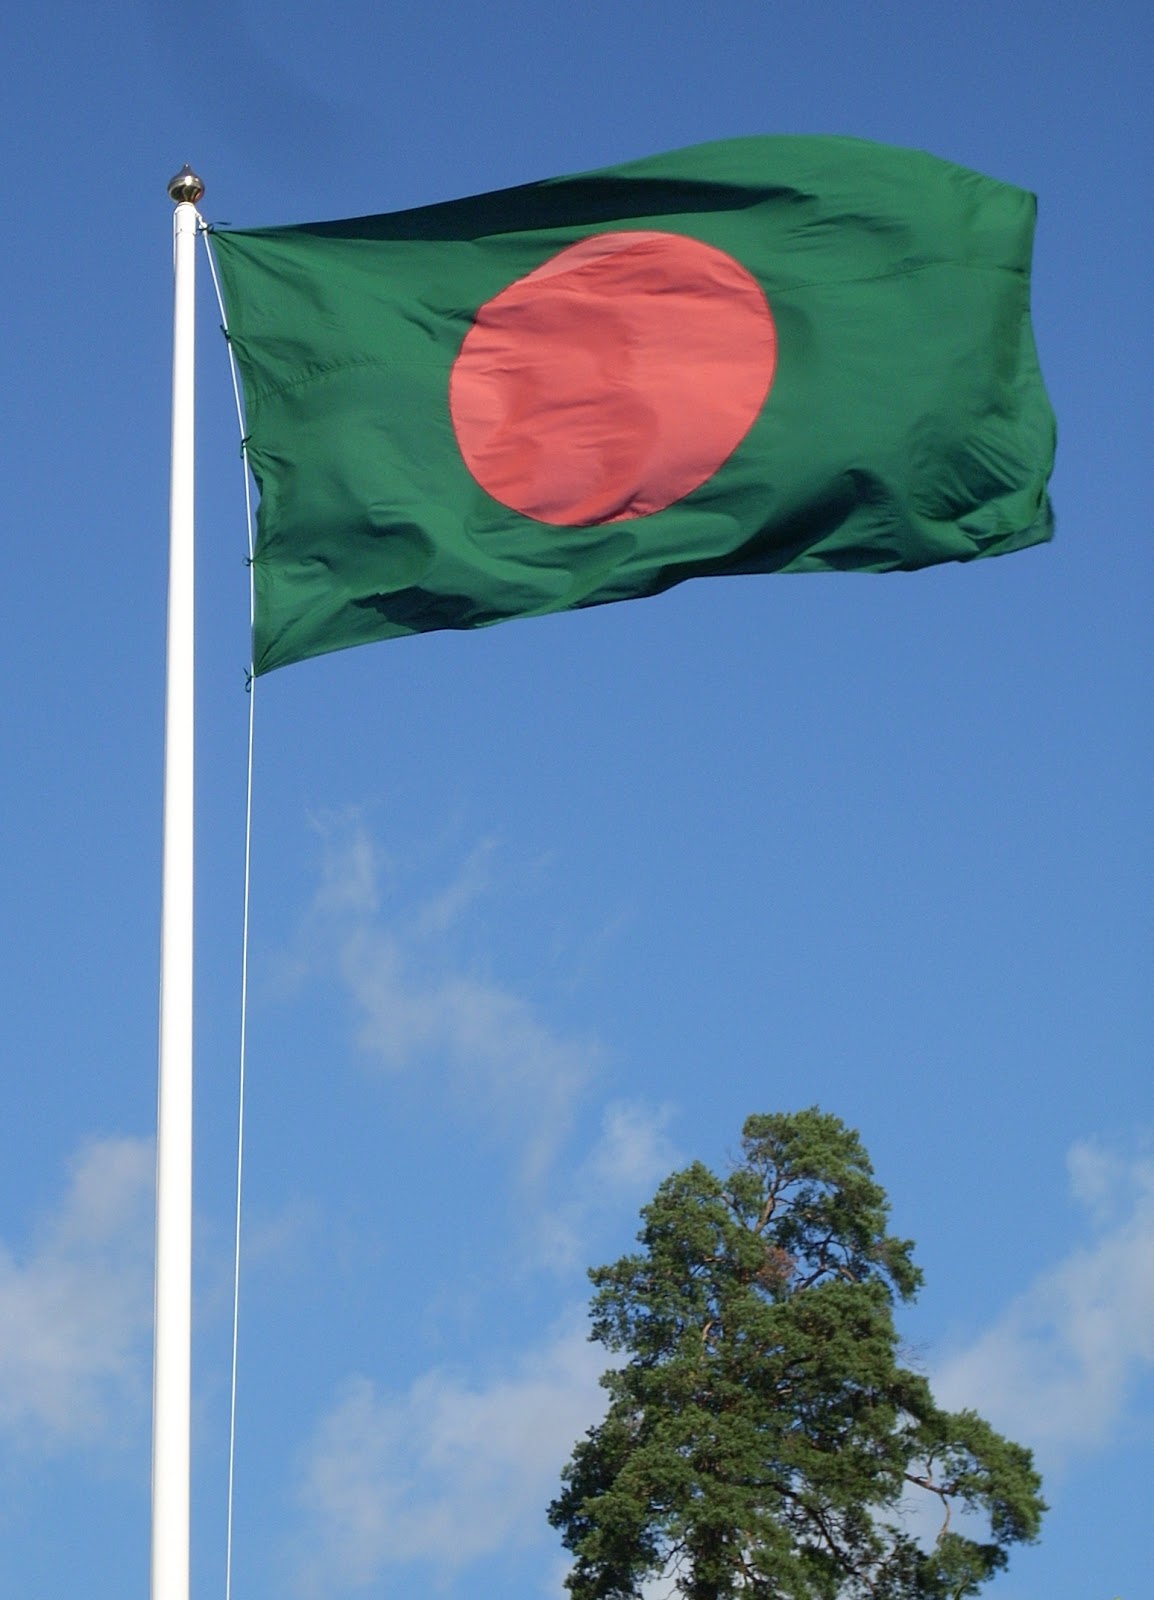 http://4.bp.blogspot.com/-VWb4UH7G9rU/T_tFPl7CFLI/AAAAAAAAAEc/jjZ6bbCgShI/s1600/Flag_of_Bangladesh_and_tree.jpg